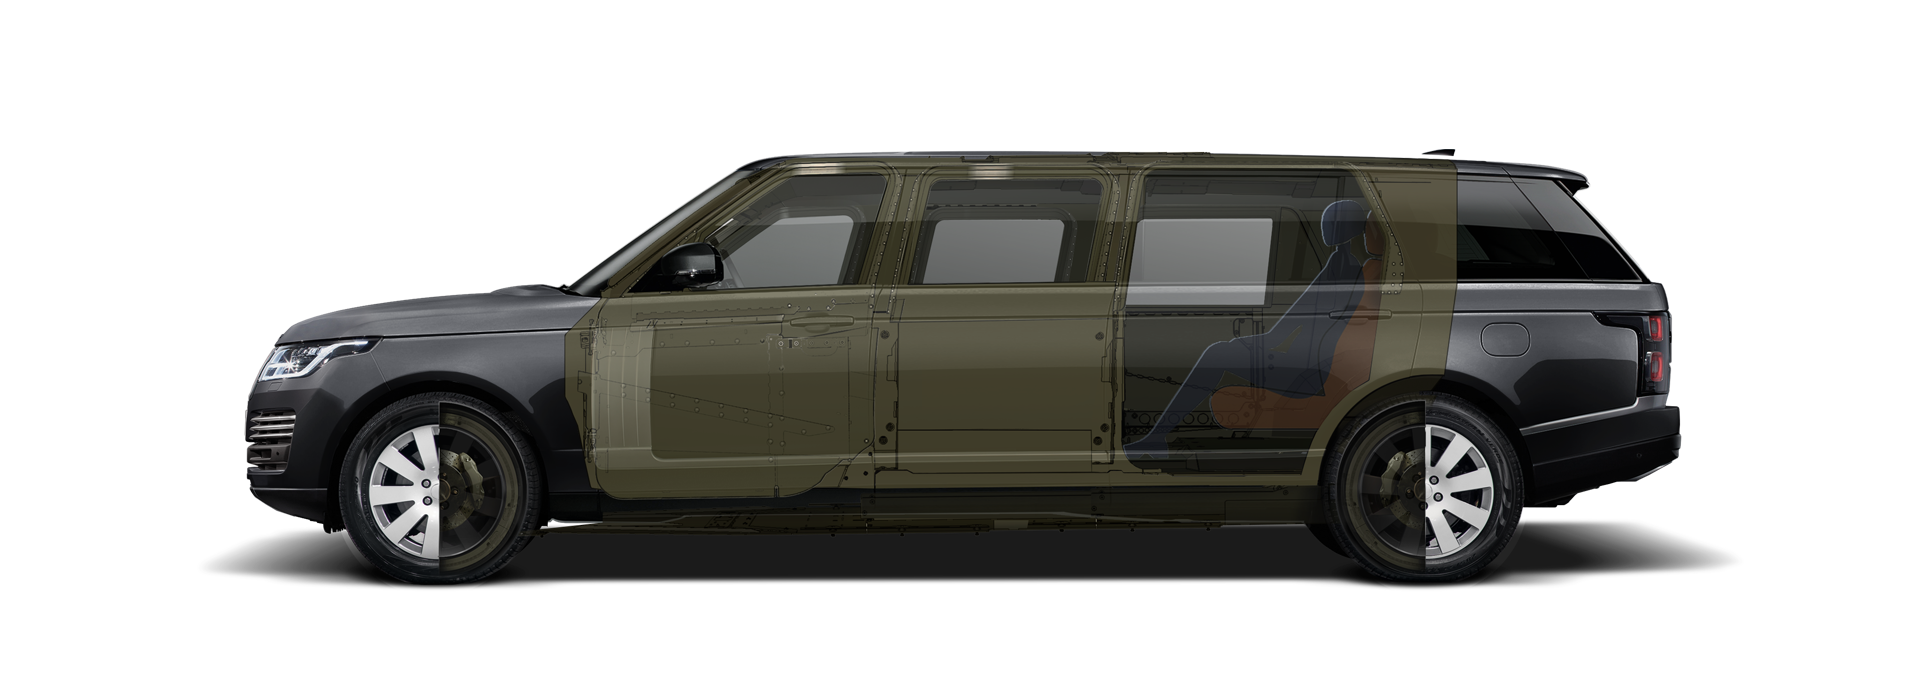 Stretched & Armored Range Rover +1000mm - KLASSEN